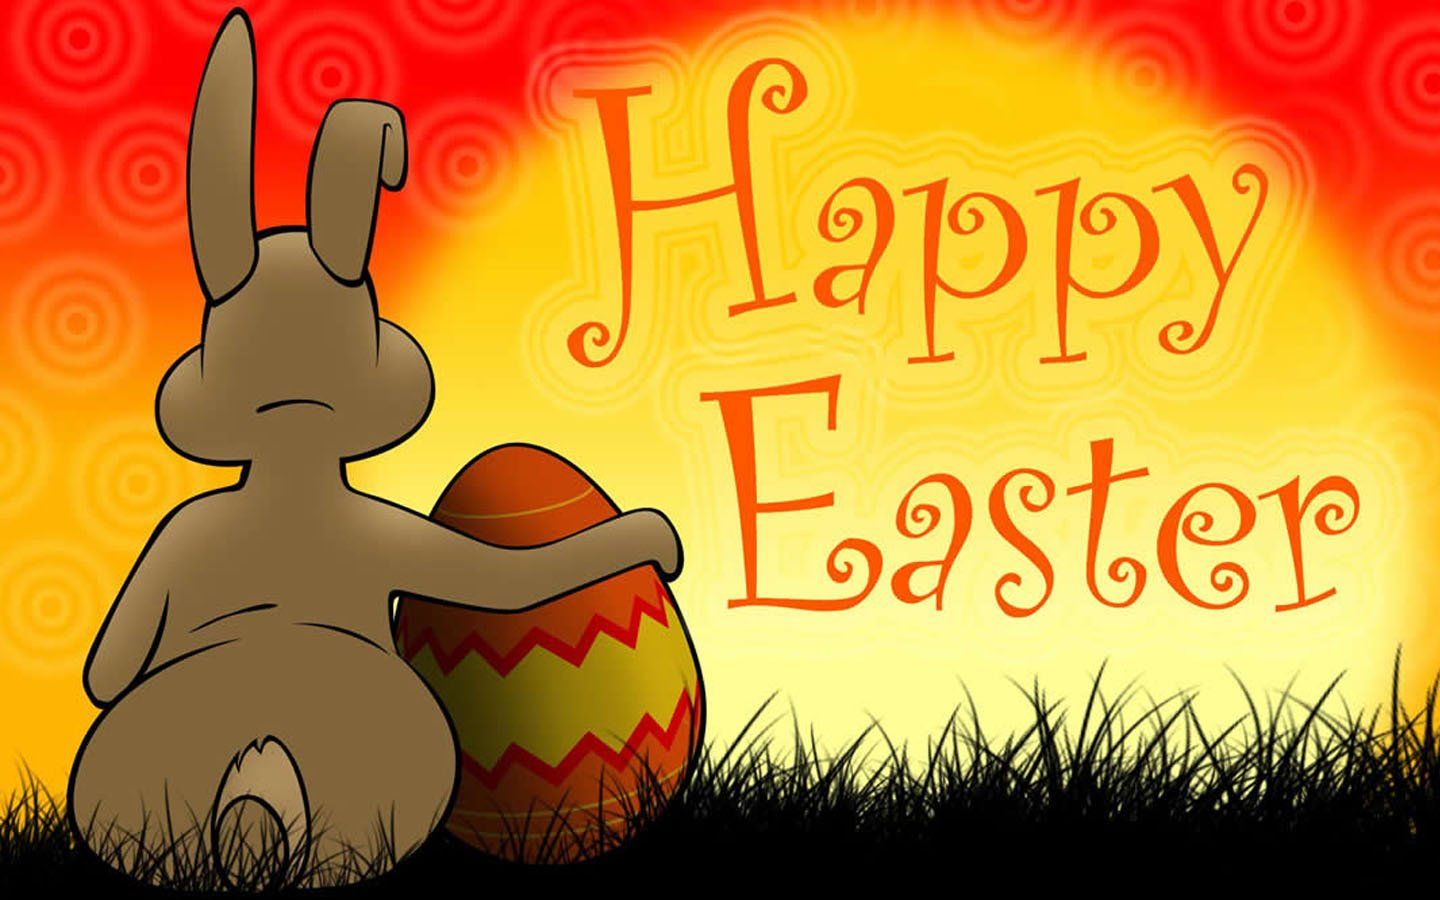 Desktop Background Wallpaper: Happy Easter Wallpaper. Easter Desktop Background